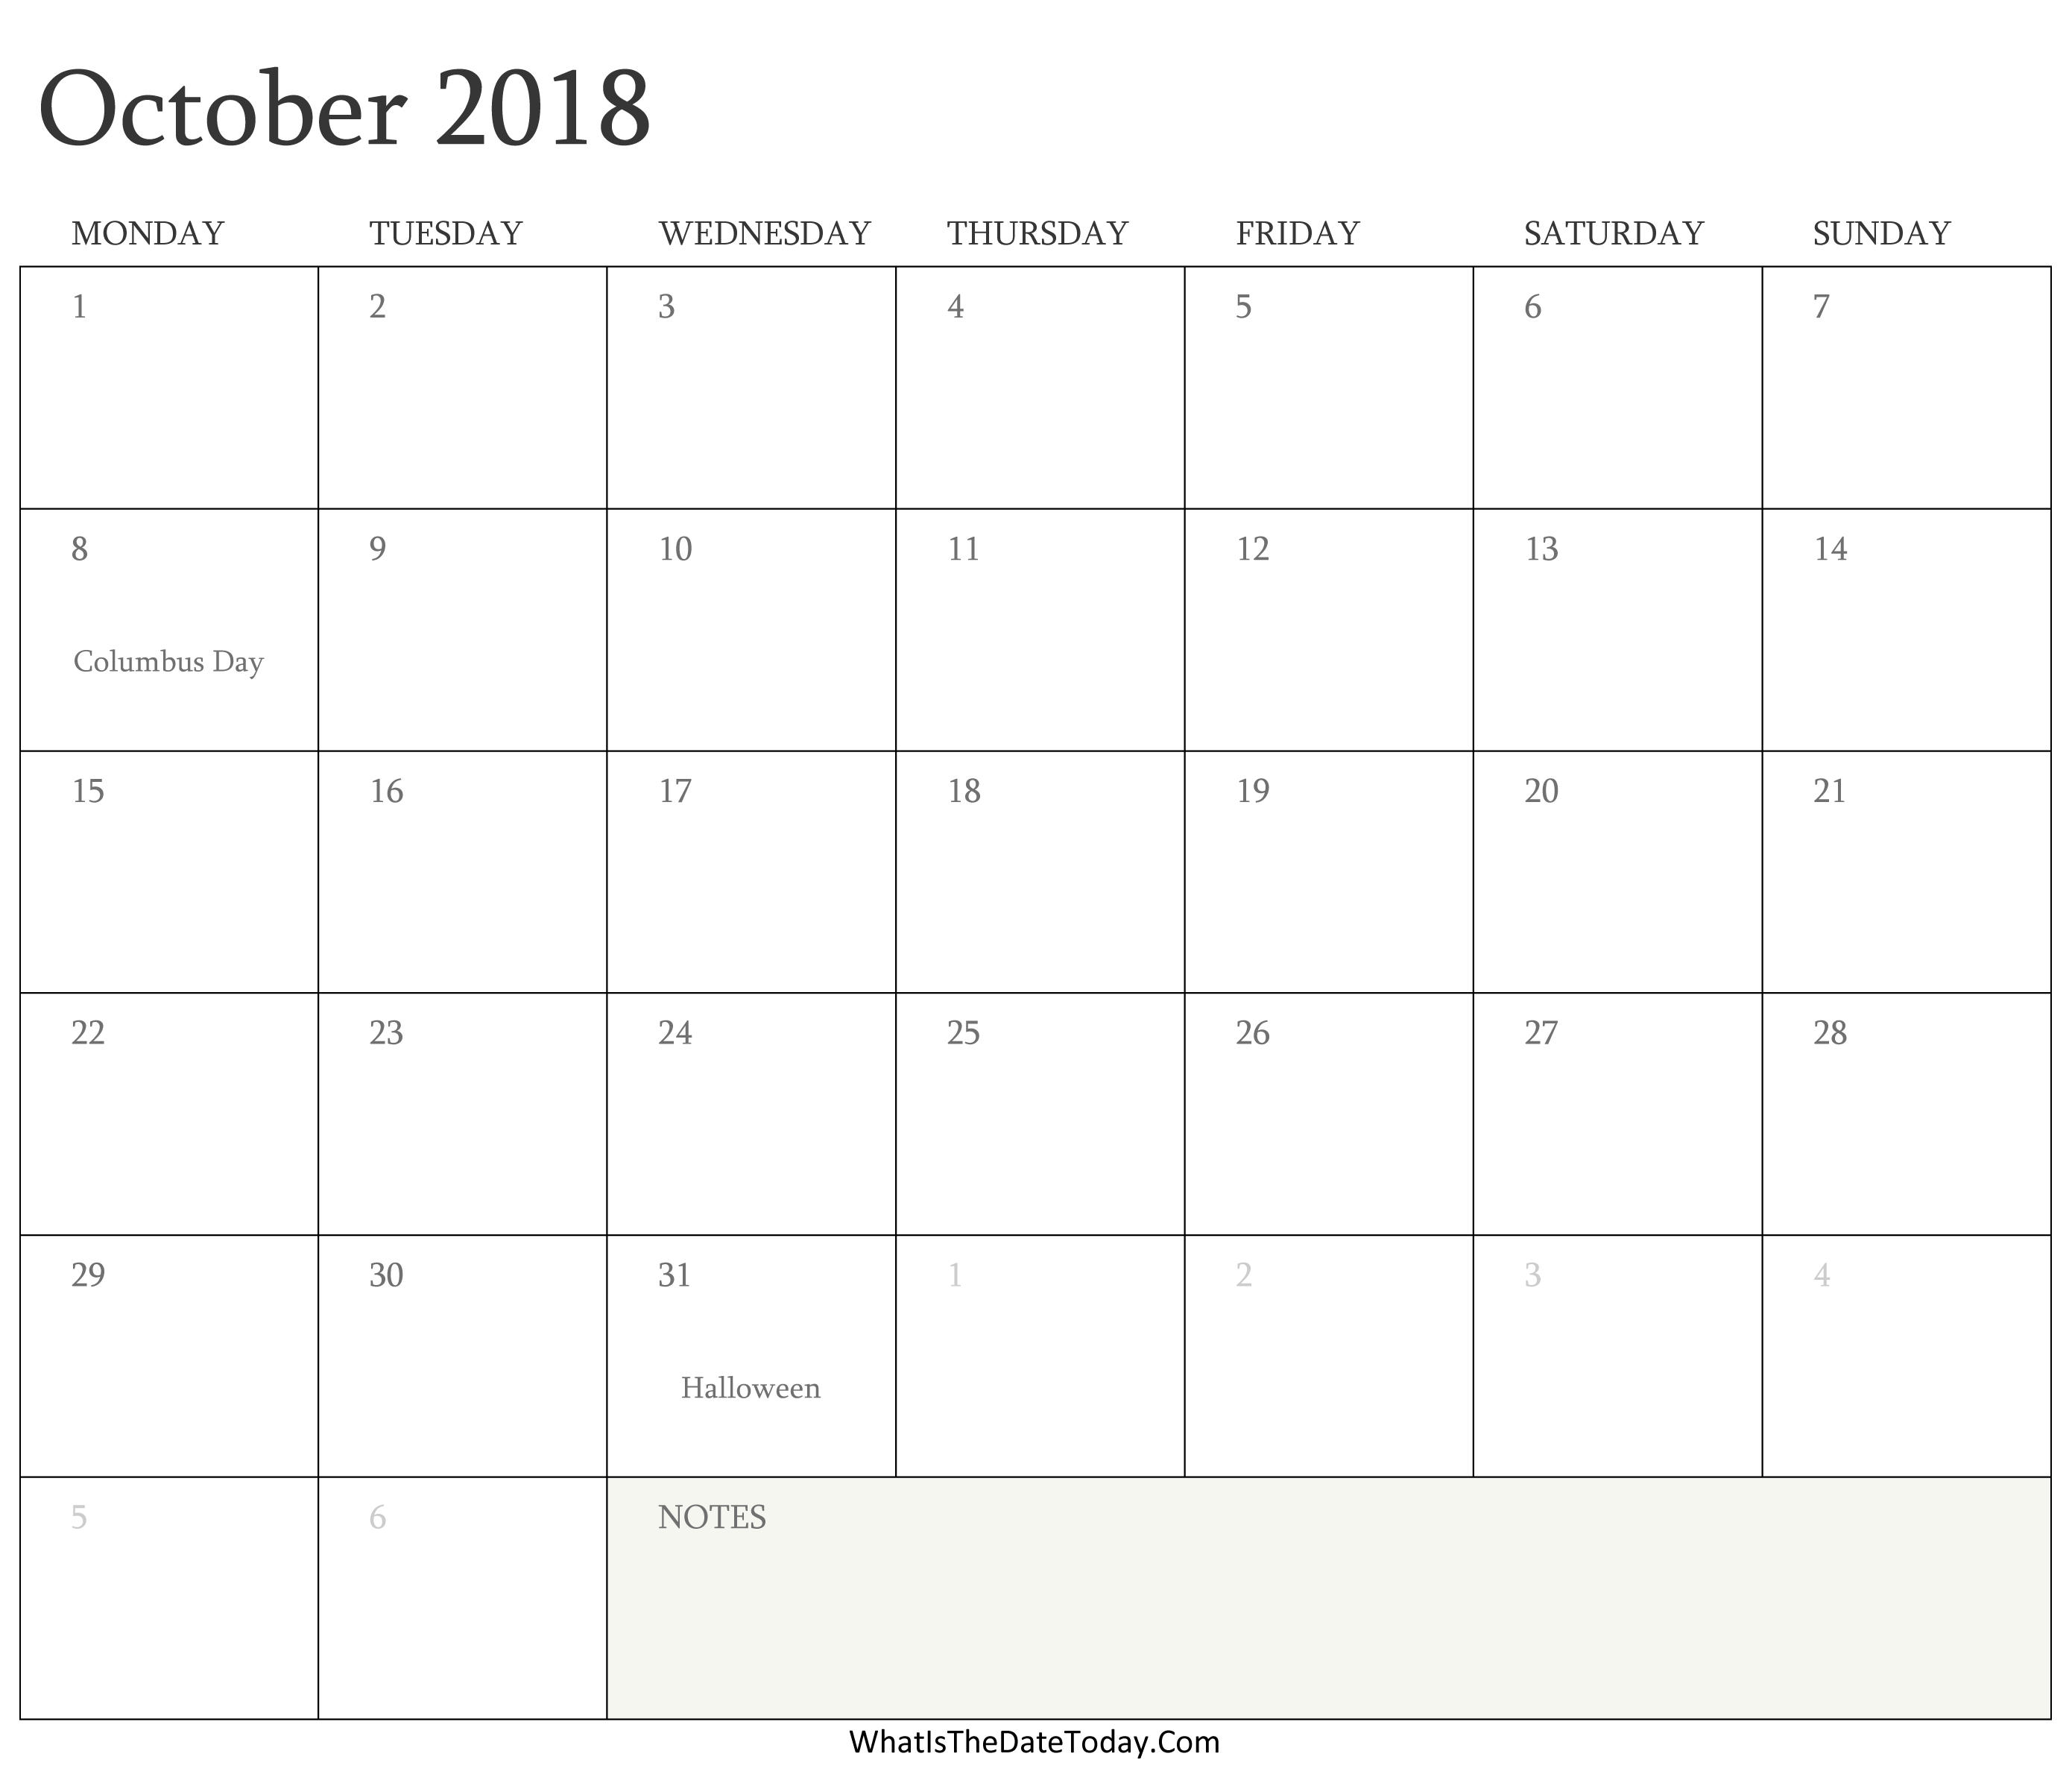 editable-calendar-october-2018-with-holidays-whatisthedatetoday-com